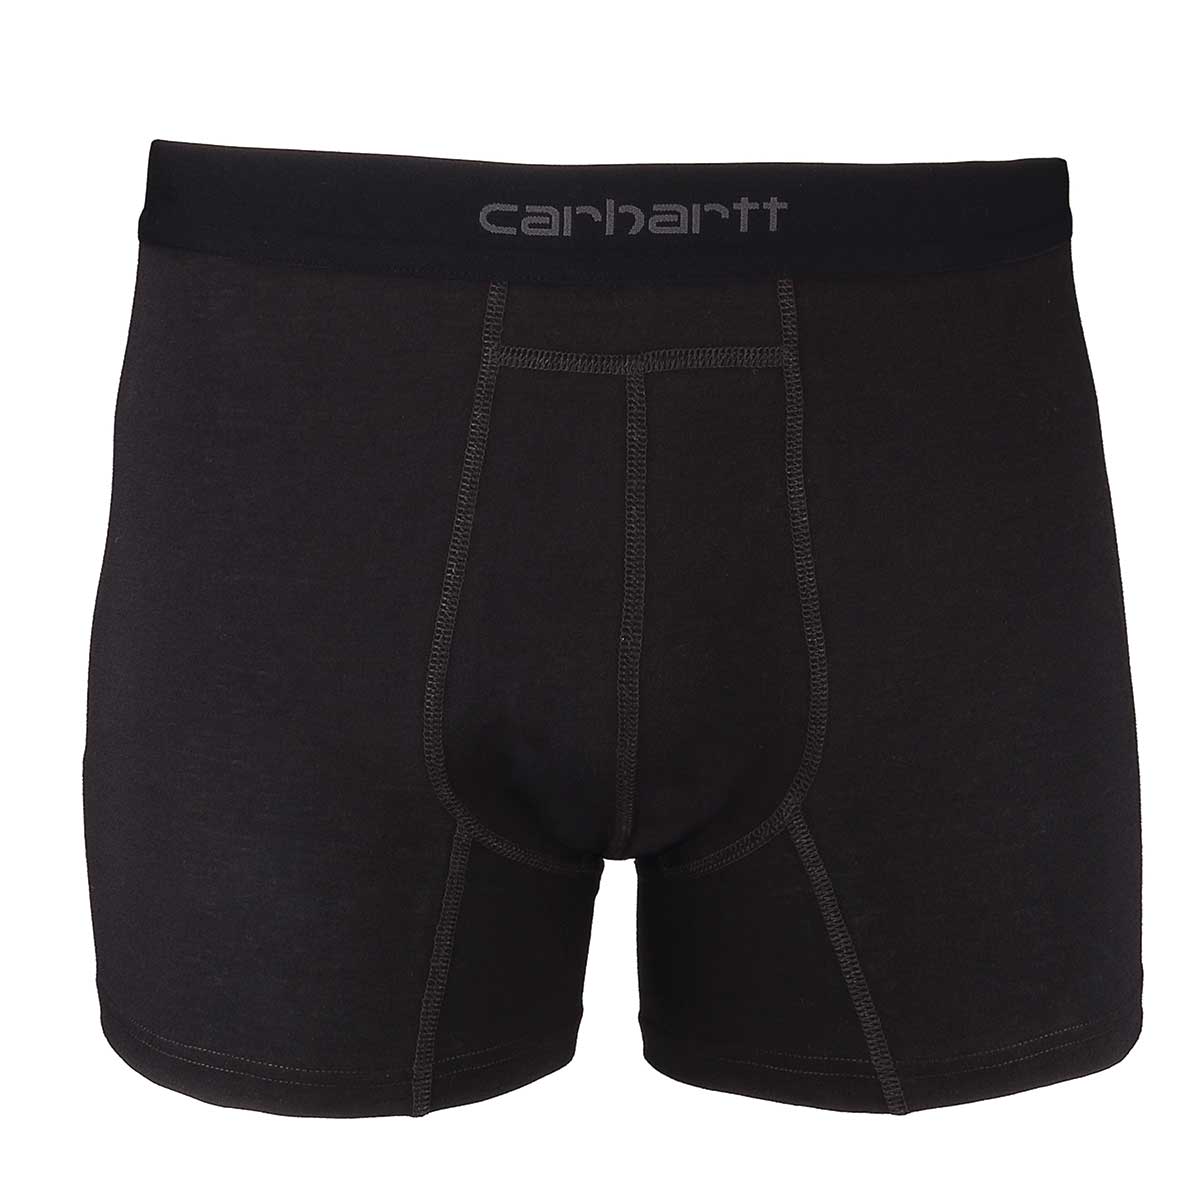 Carhartt 5 Inch Cotton Boxer Brief 2-Pack